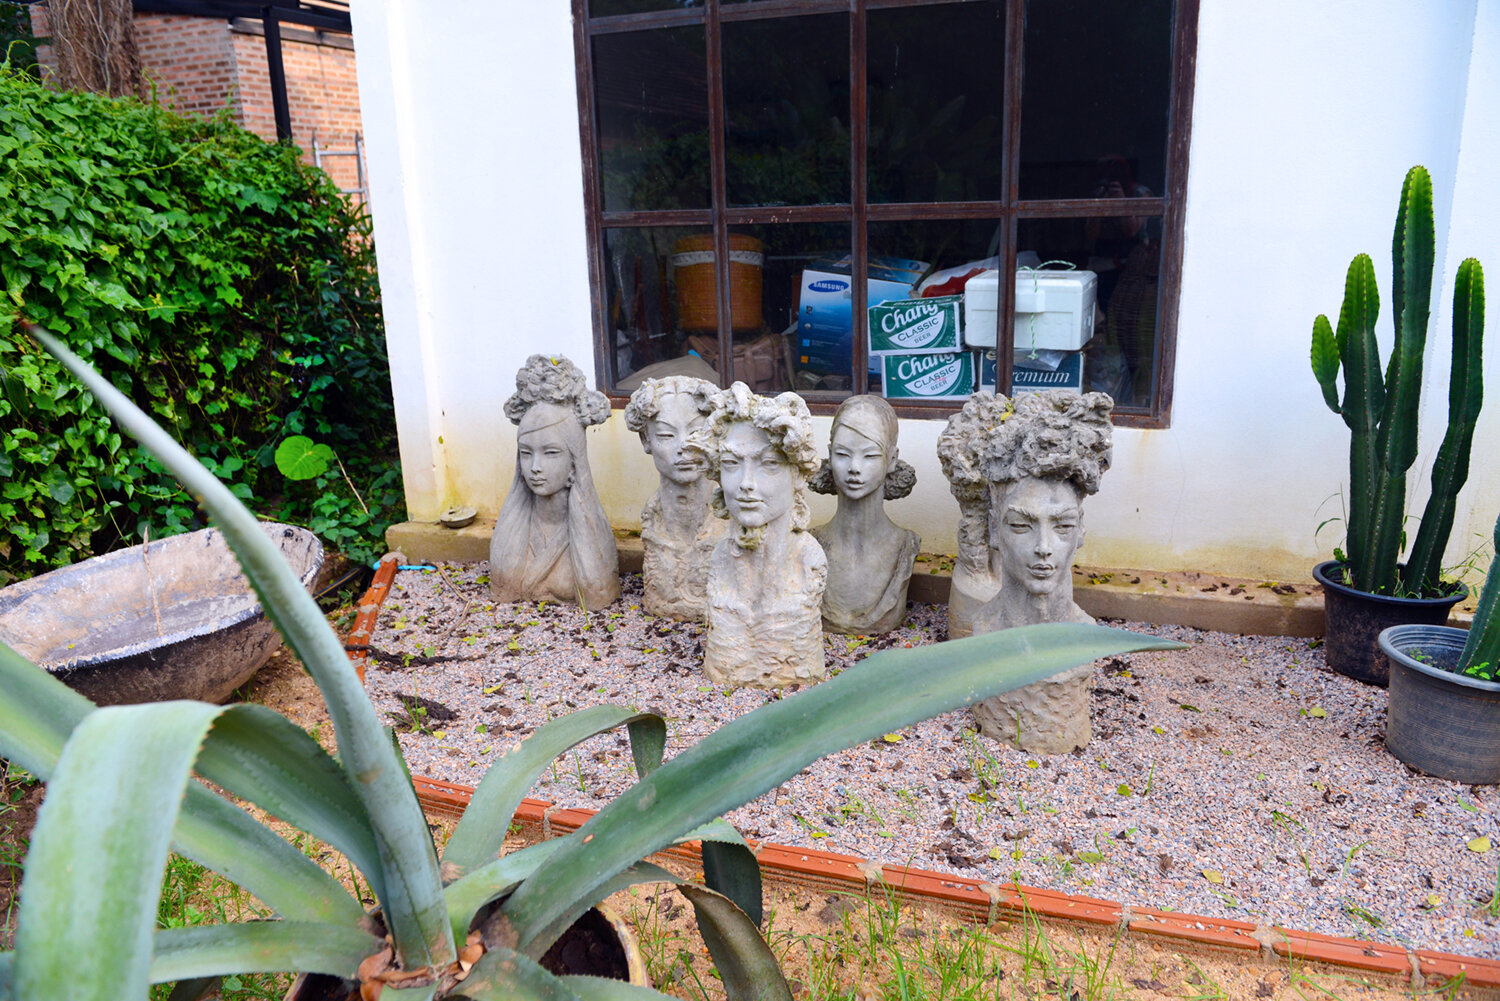 Sculptor's studio, Chiang Mai, Thailand